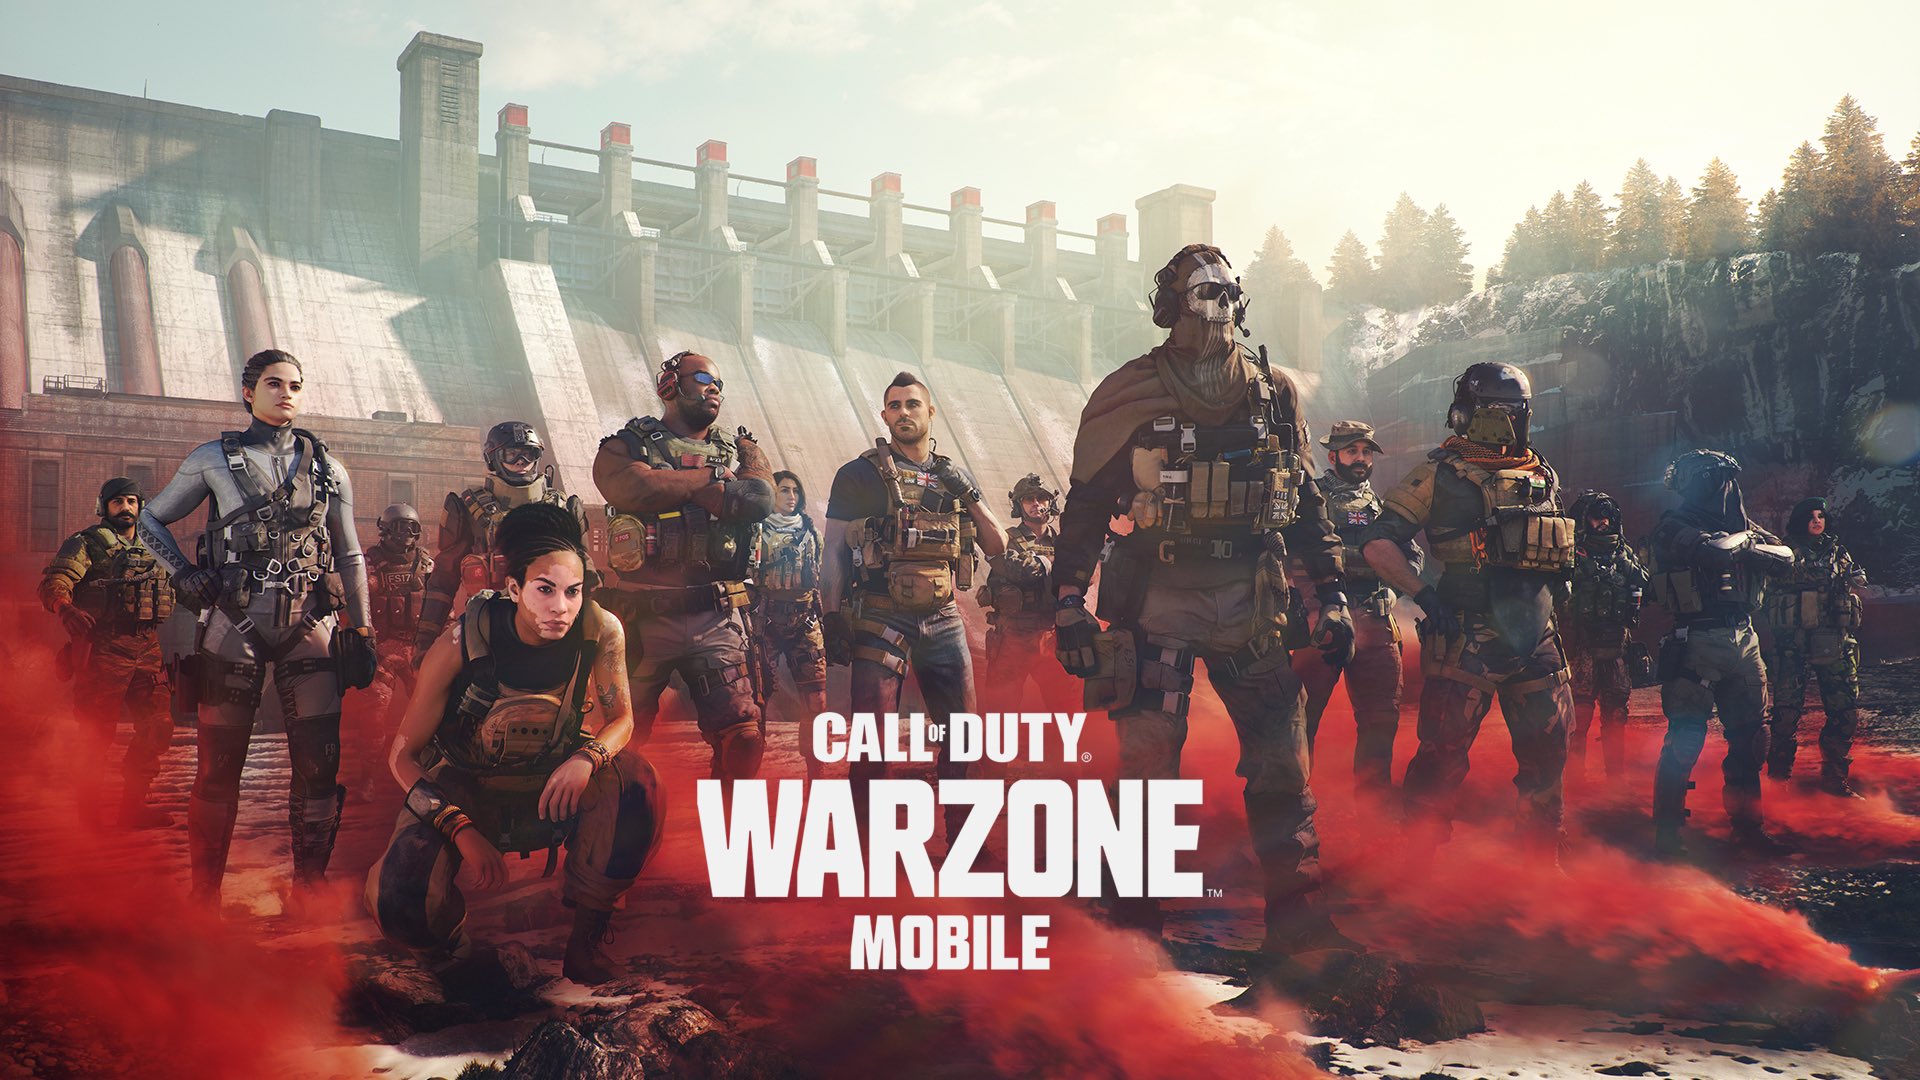 warzone mobile apk download